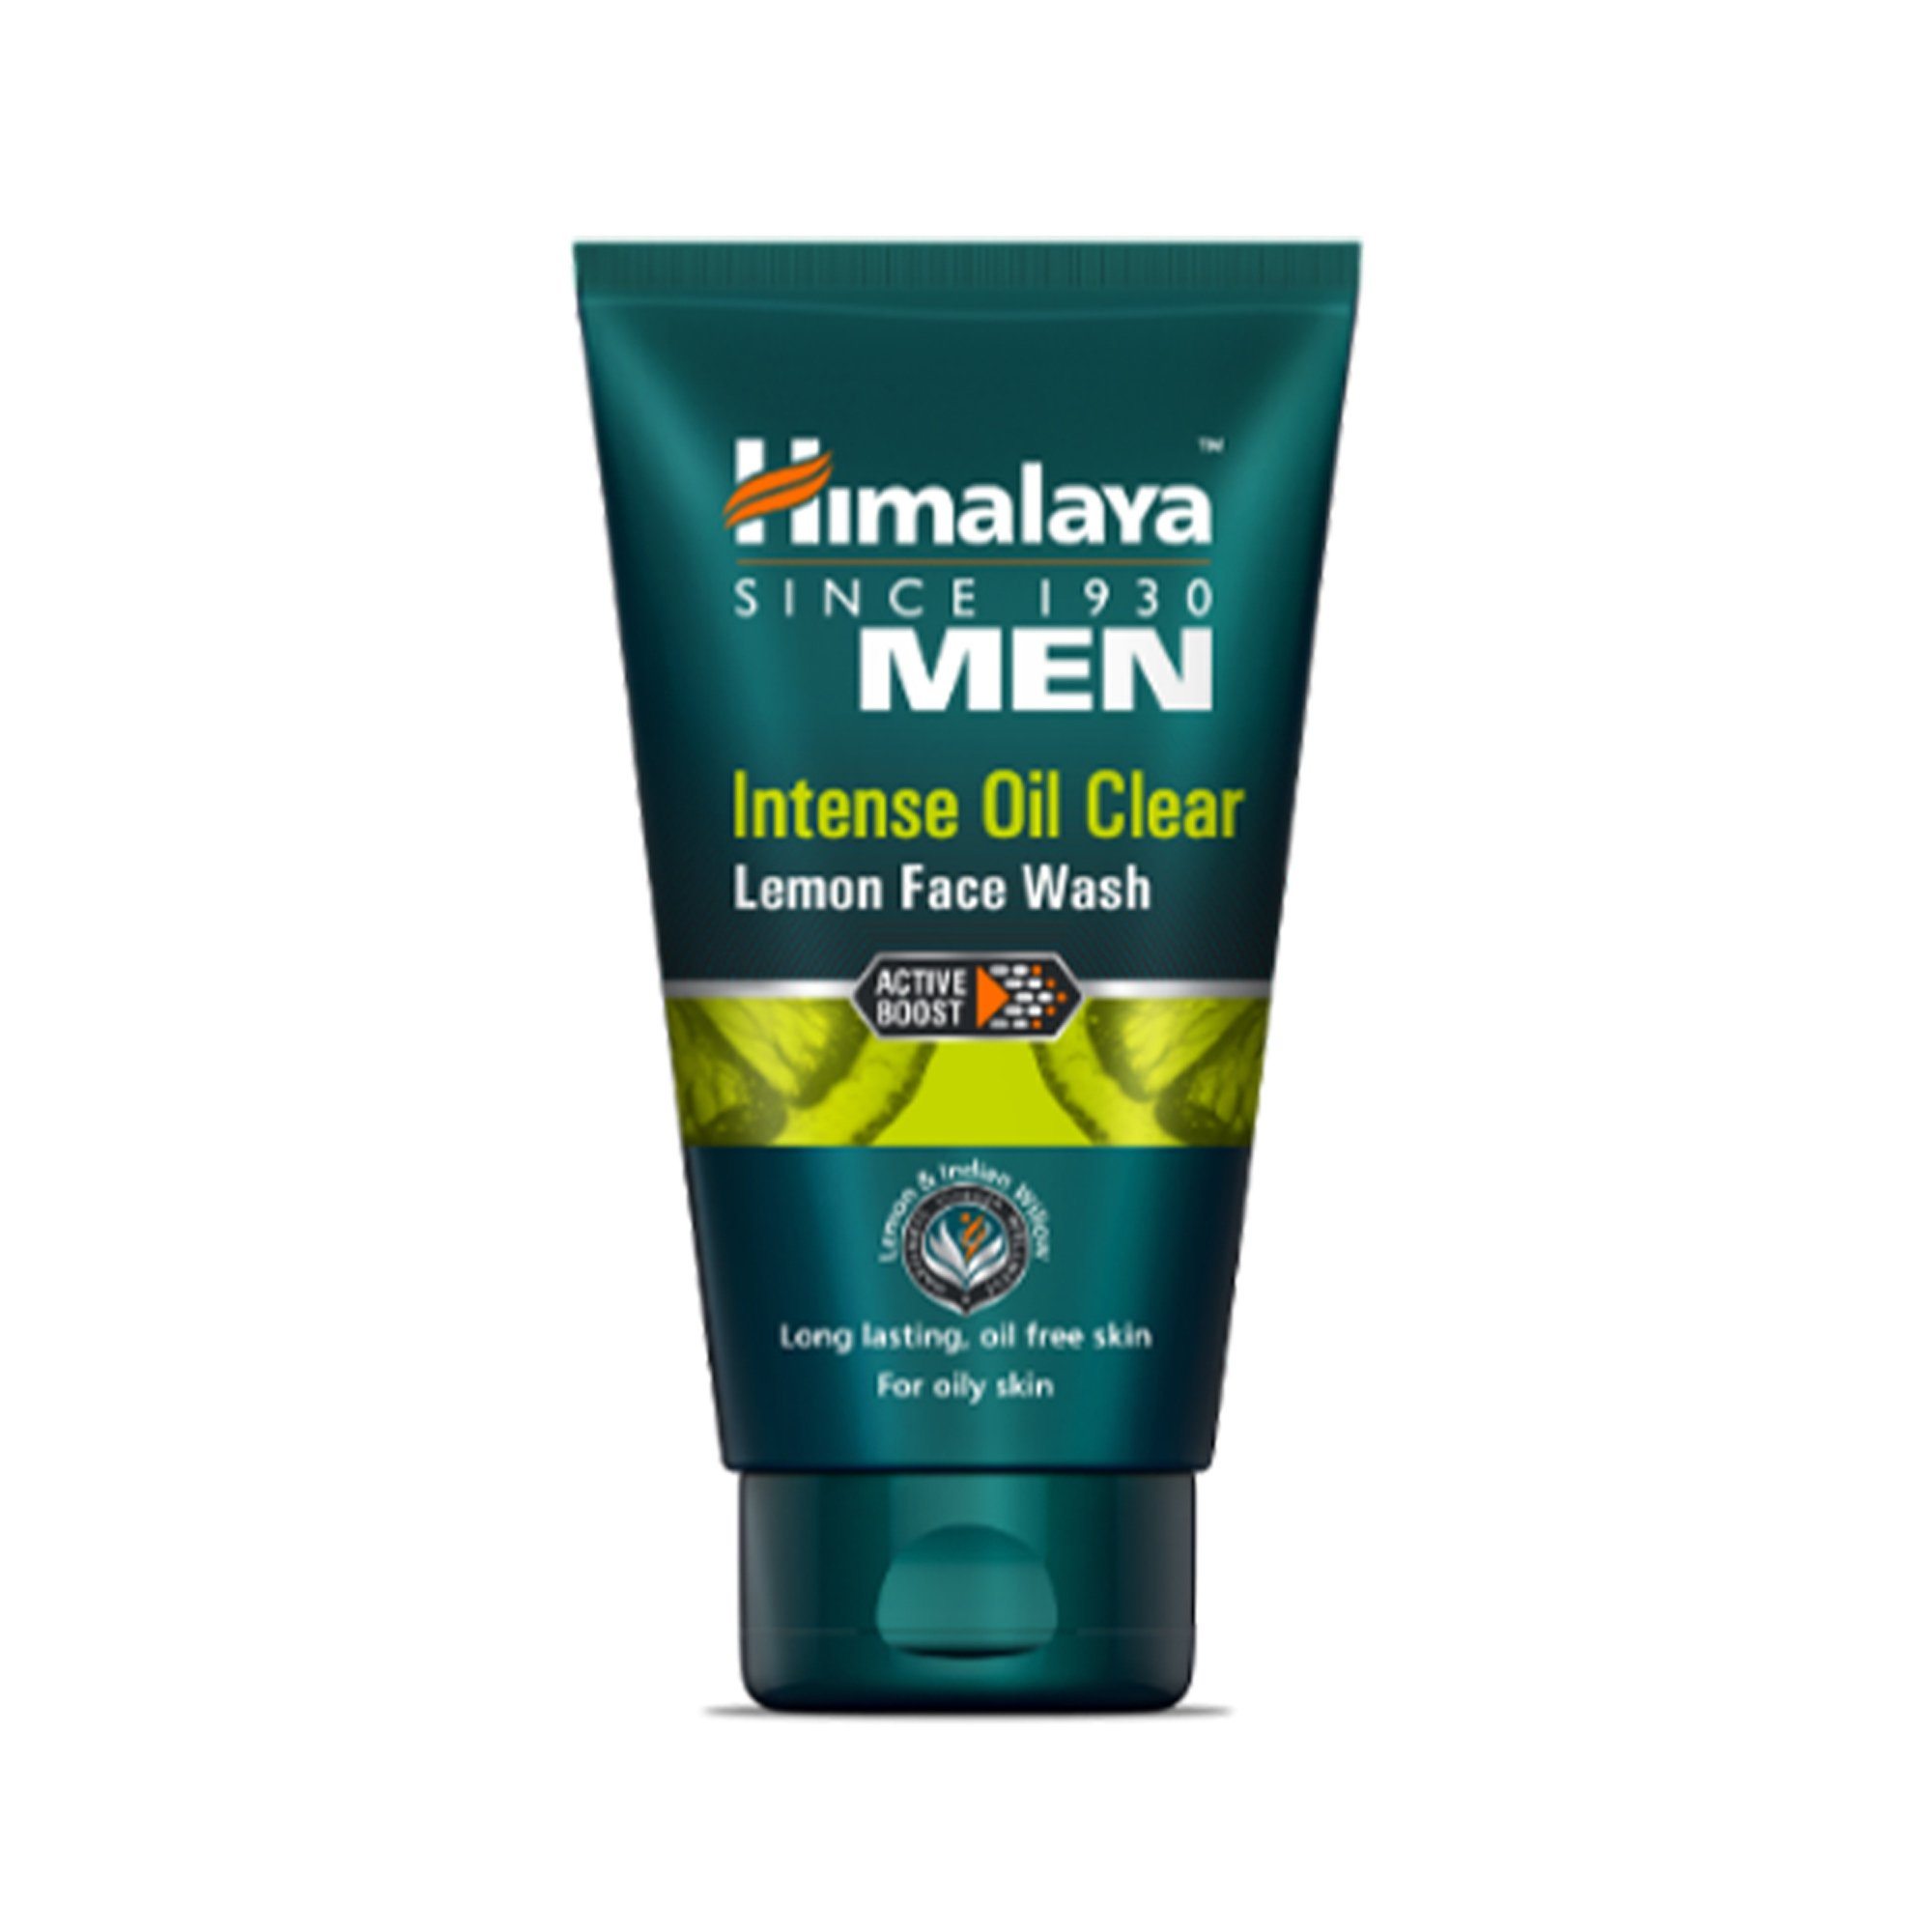 Himalaya MEN Intense Oil Clear Lemon Face Wash 50ml - Long lasting, oil free skin